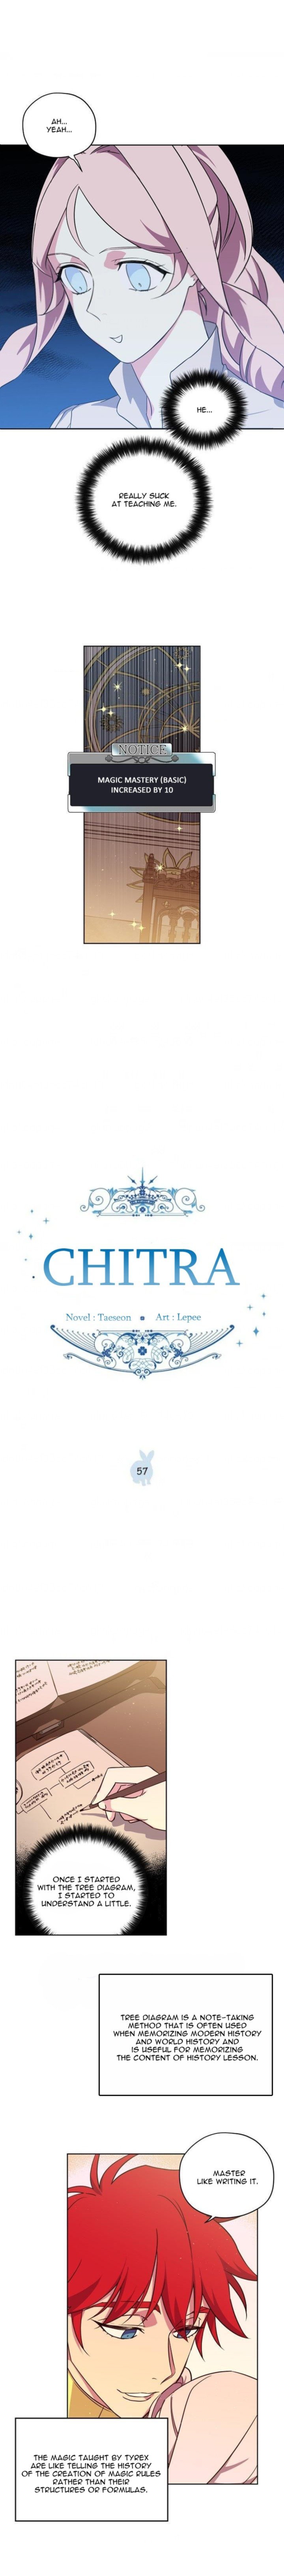 Chitra 57 1